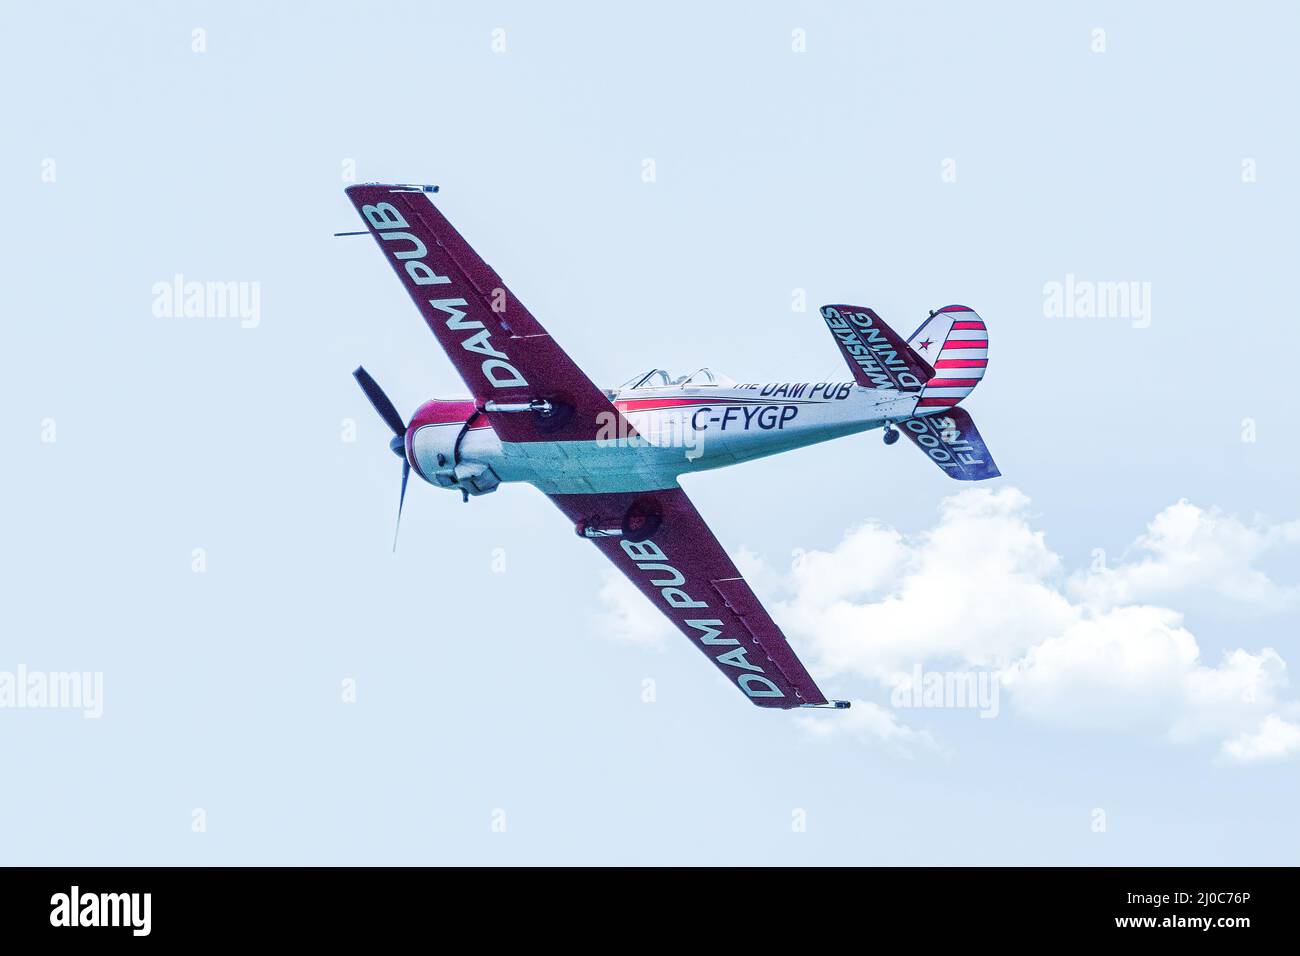 Toronto, Ontario, Kanada - 4. September 2021: Gord Price in seinem Dam Pub Flugzeug (Yak-50) bei der Toronto International Airshow Stockfoto